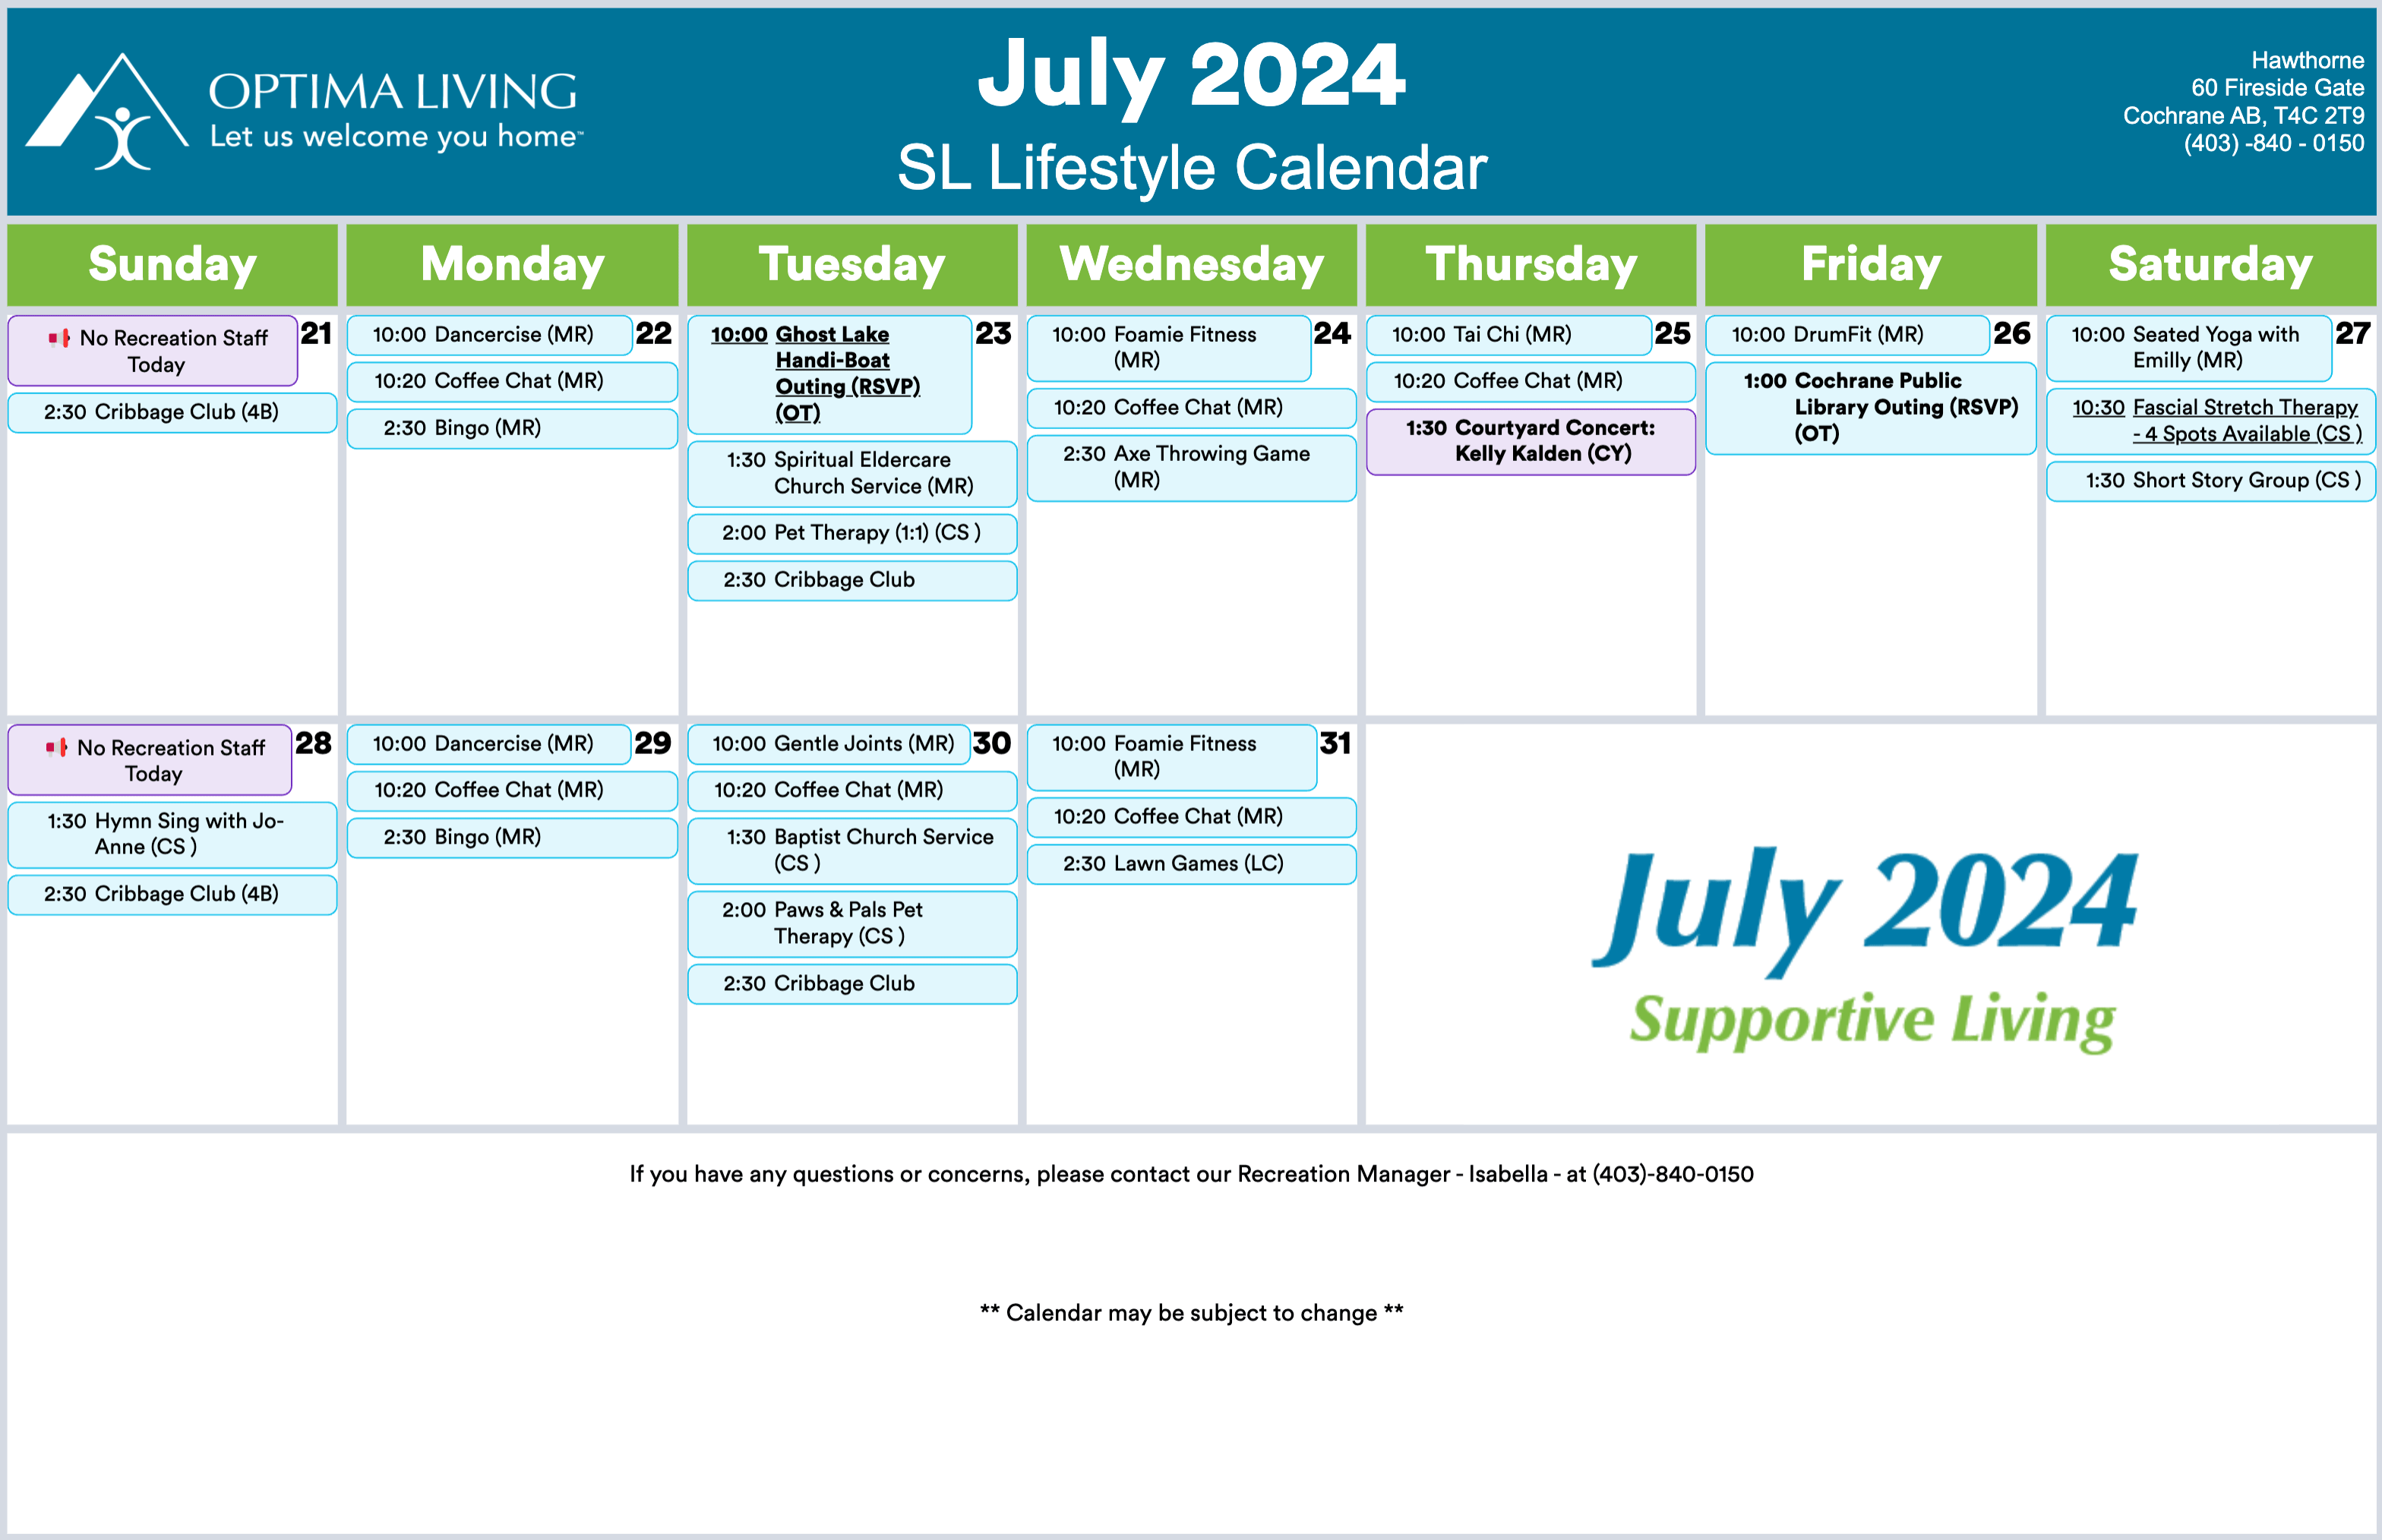 Hawthorne July 21 - 31 2024 Supportive Living event calendar